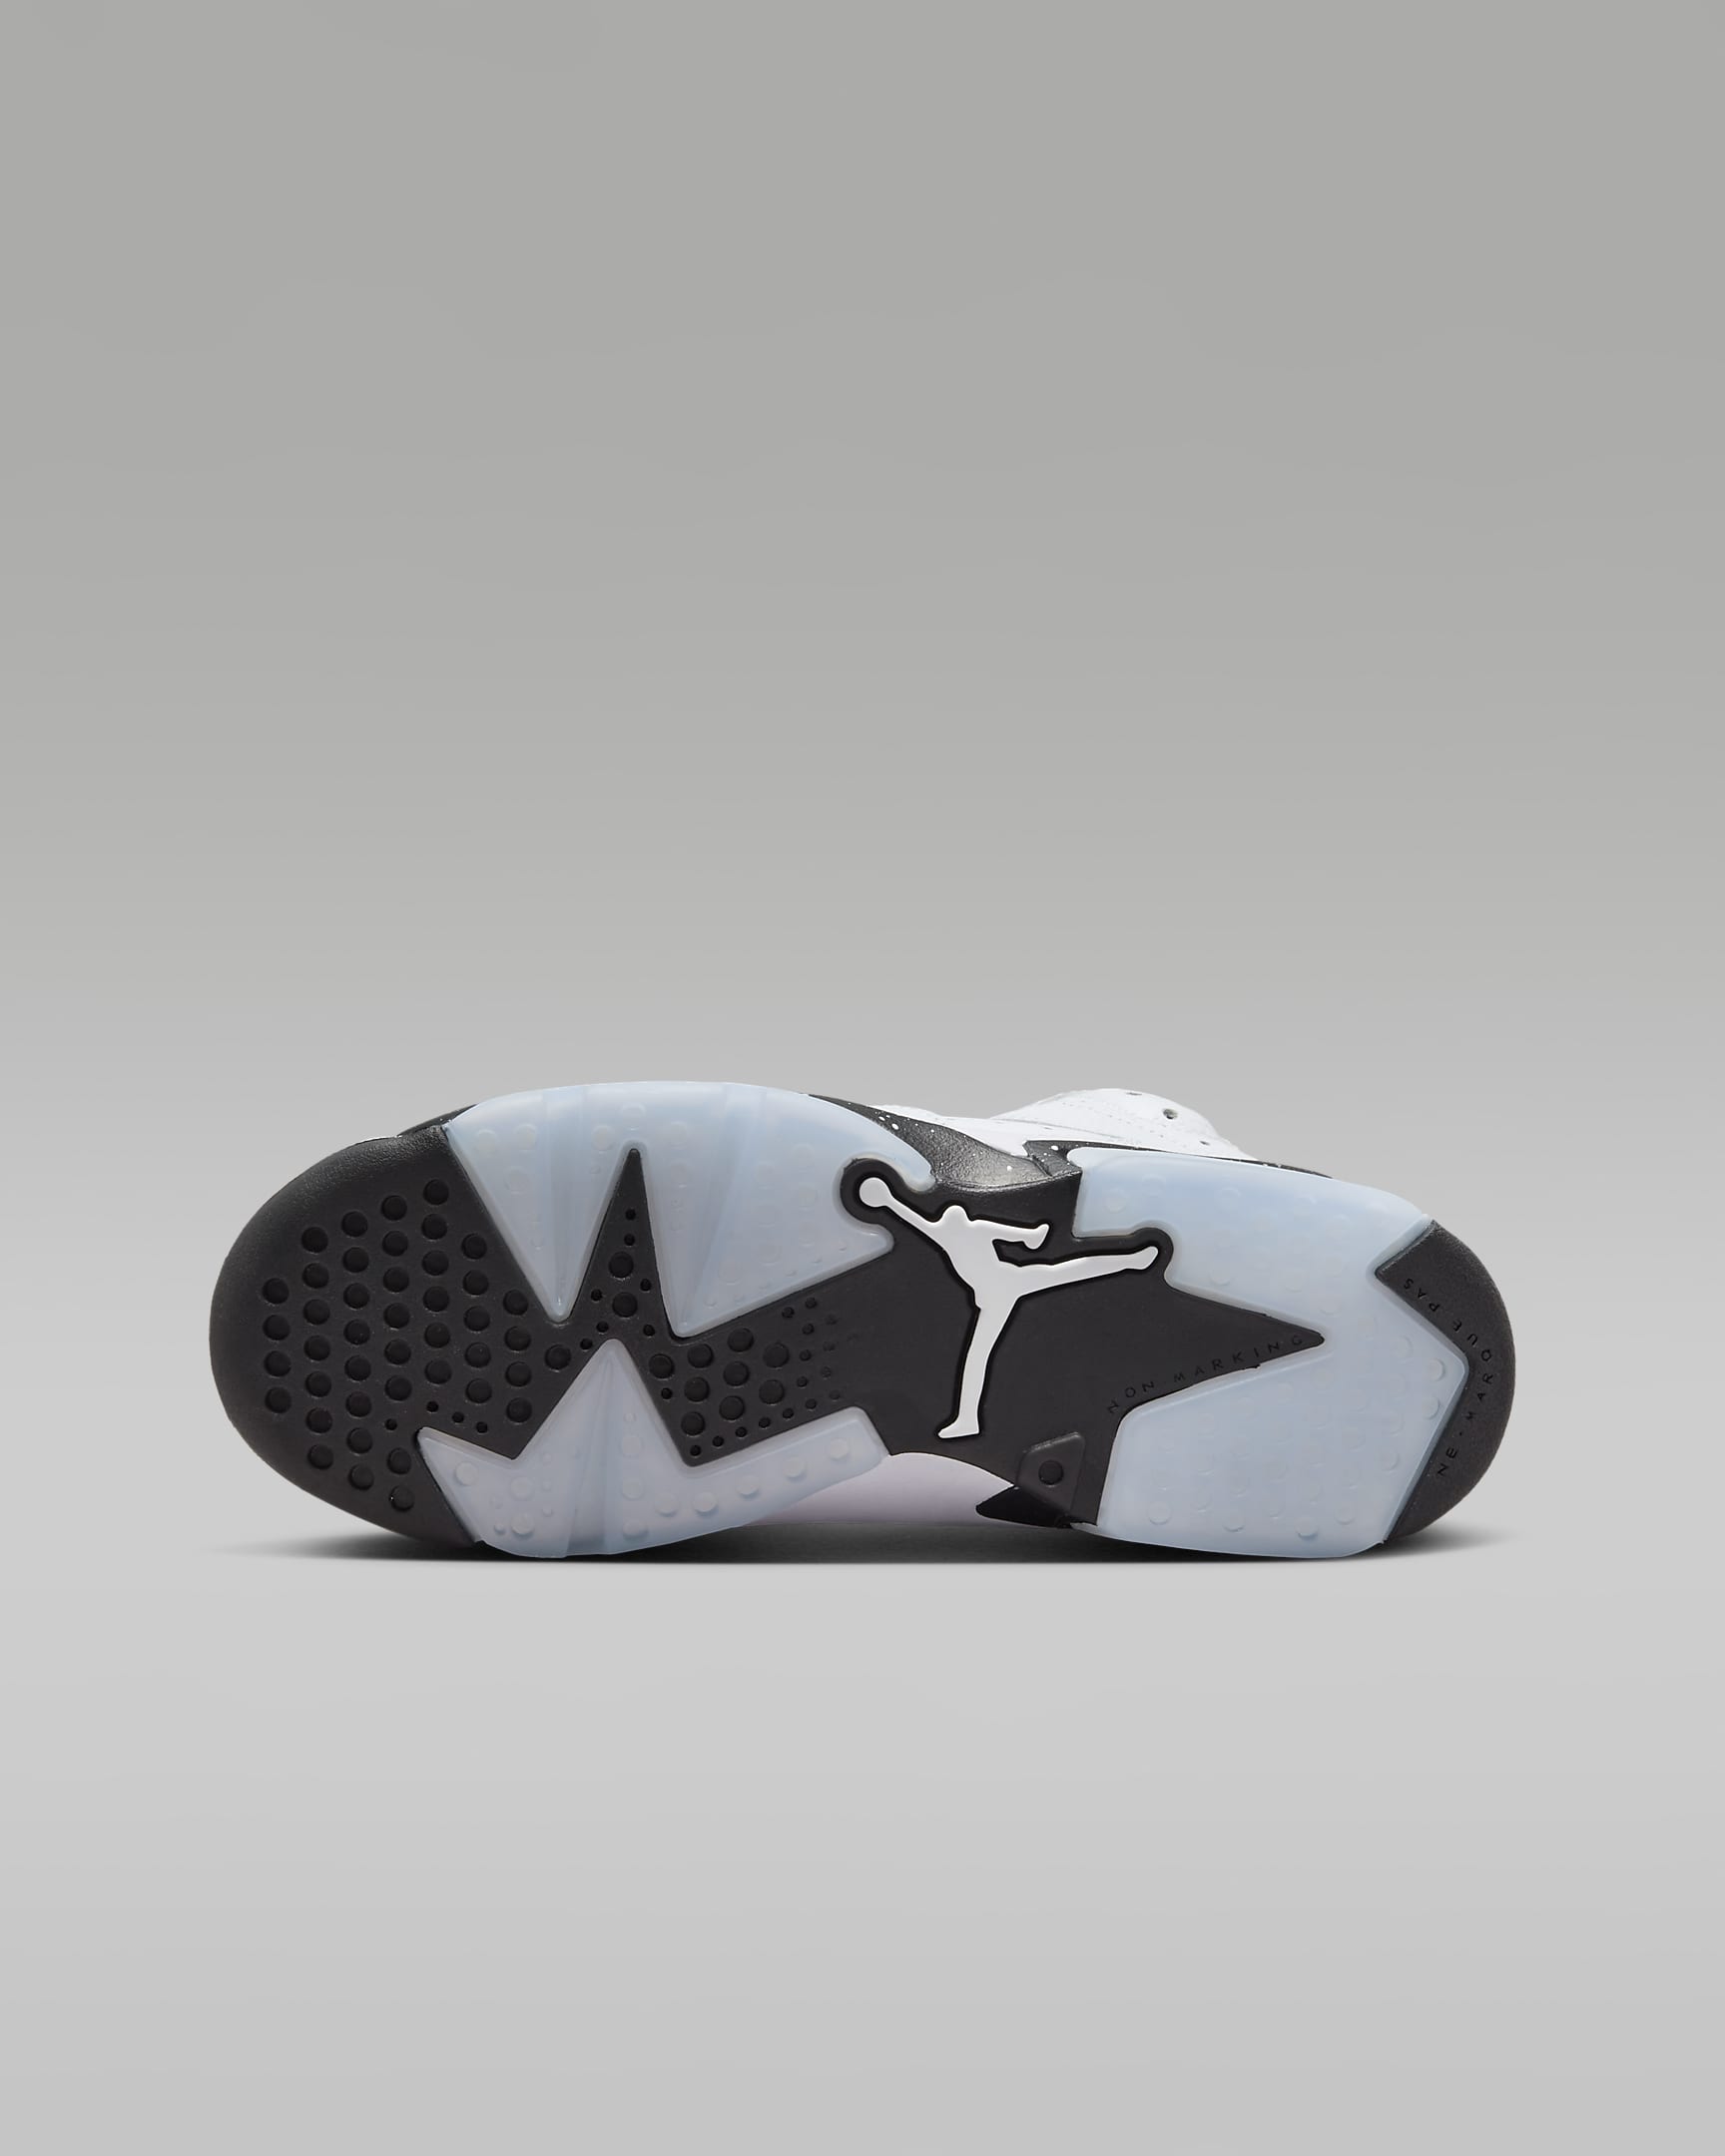 Air Jordan 6 Retro "White/Black" Big Kids' Shoes - White/Black